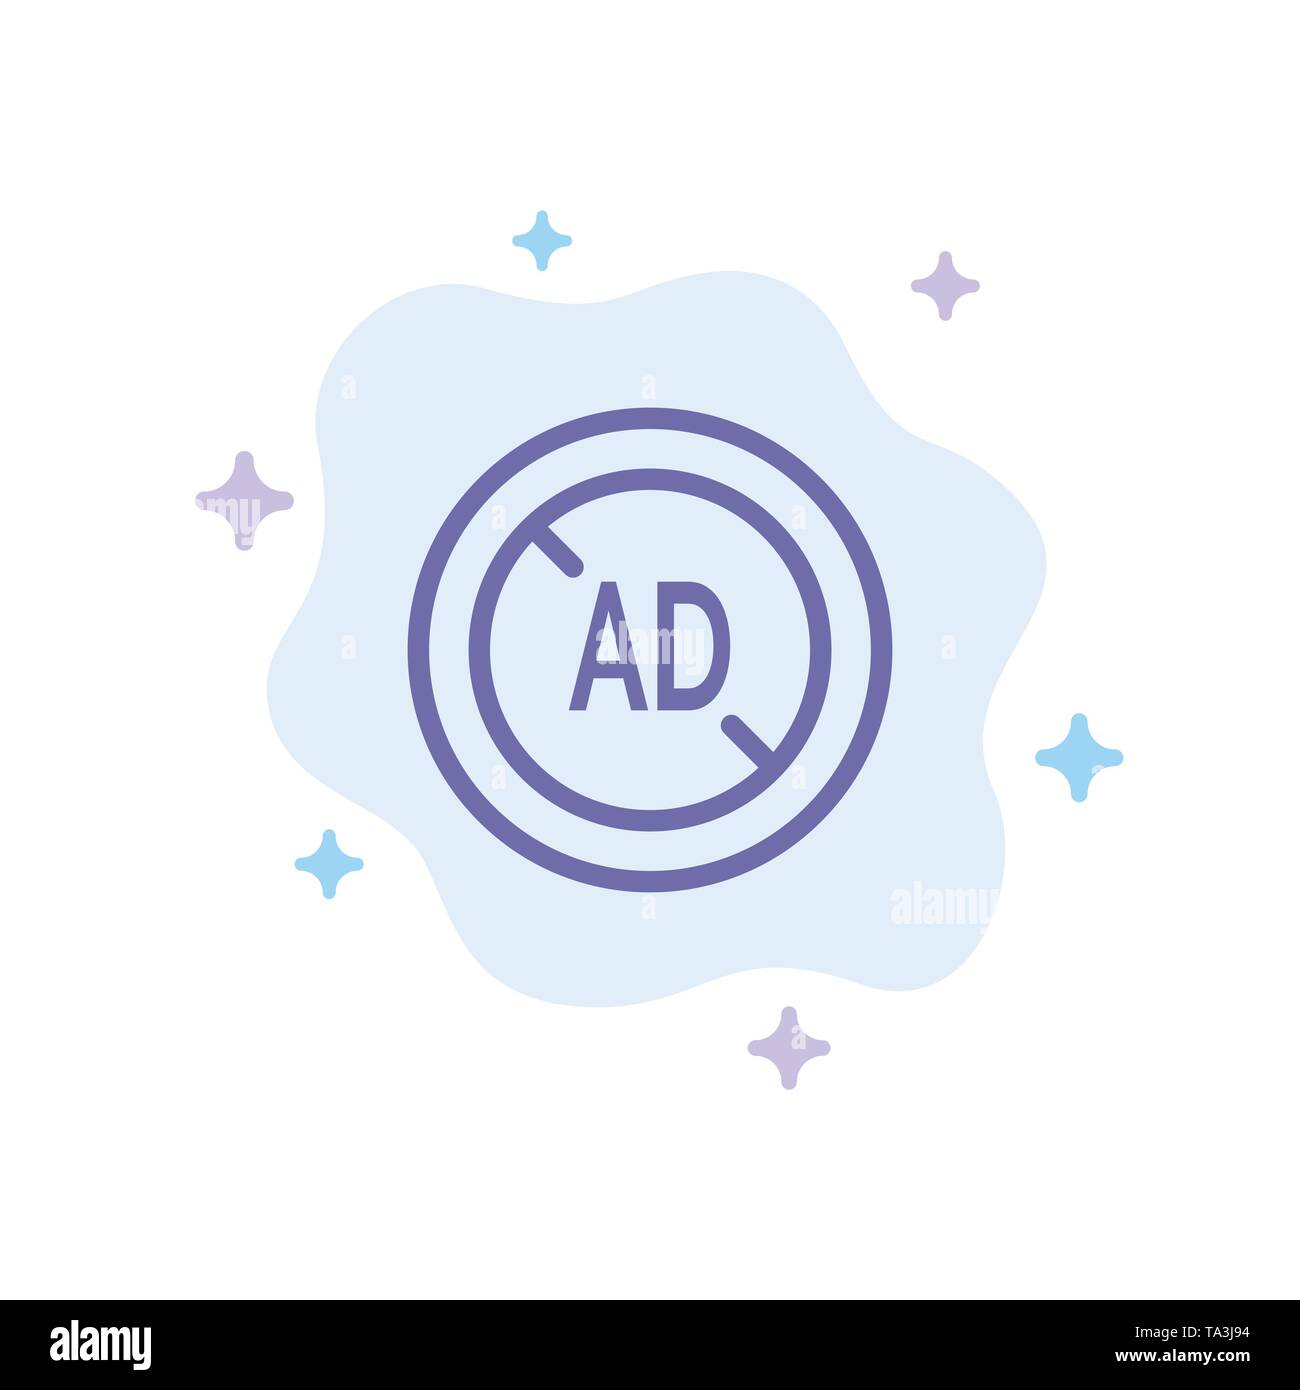 Ad, Blocker, Ad Blocker, Digital Blue Icon on Abstract Cloud Background Stock Vector